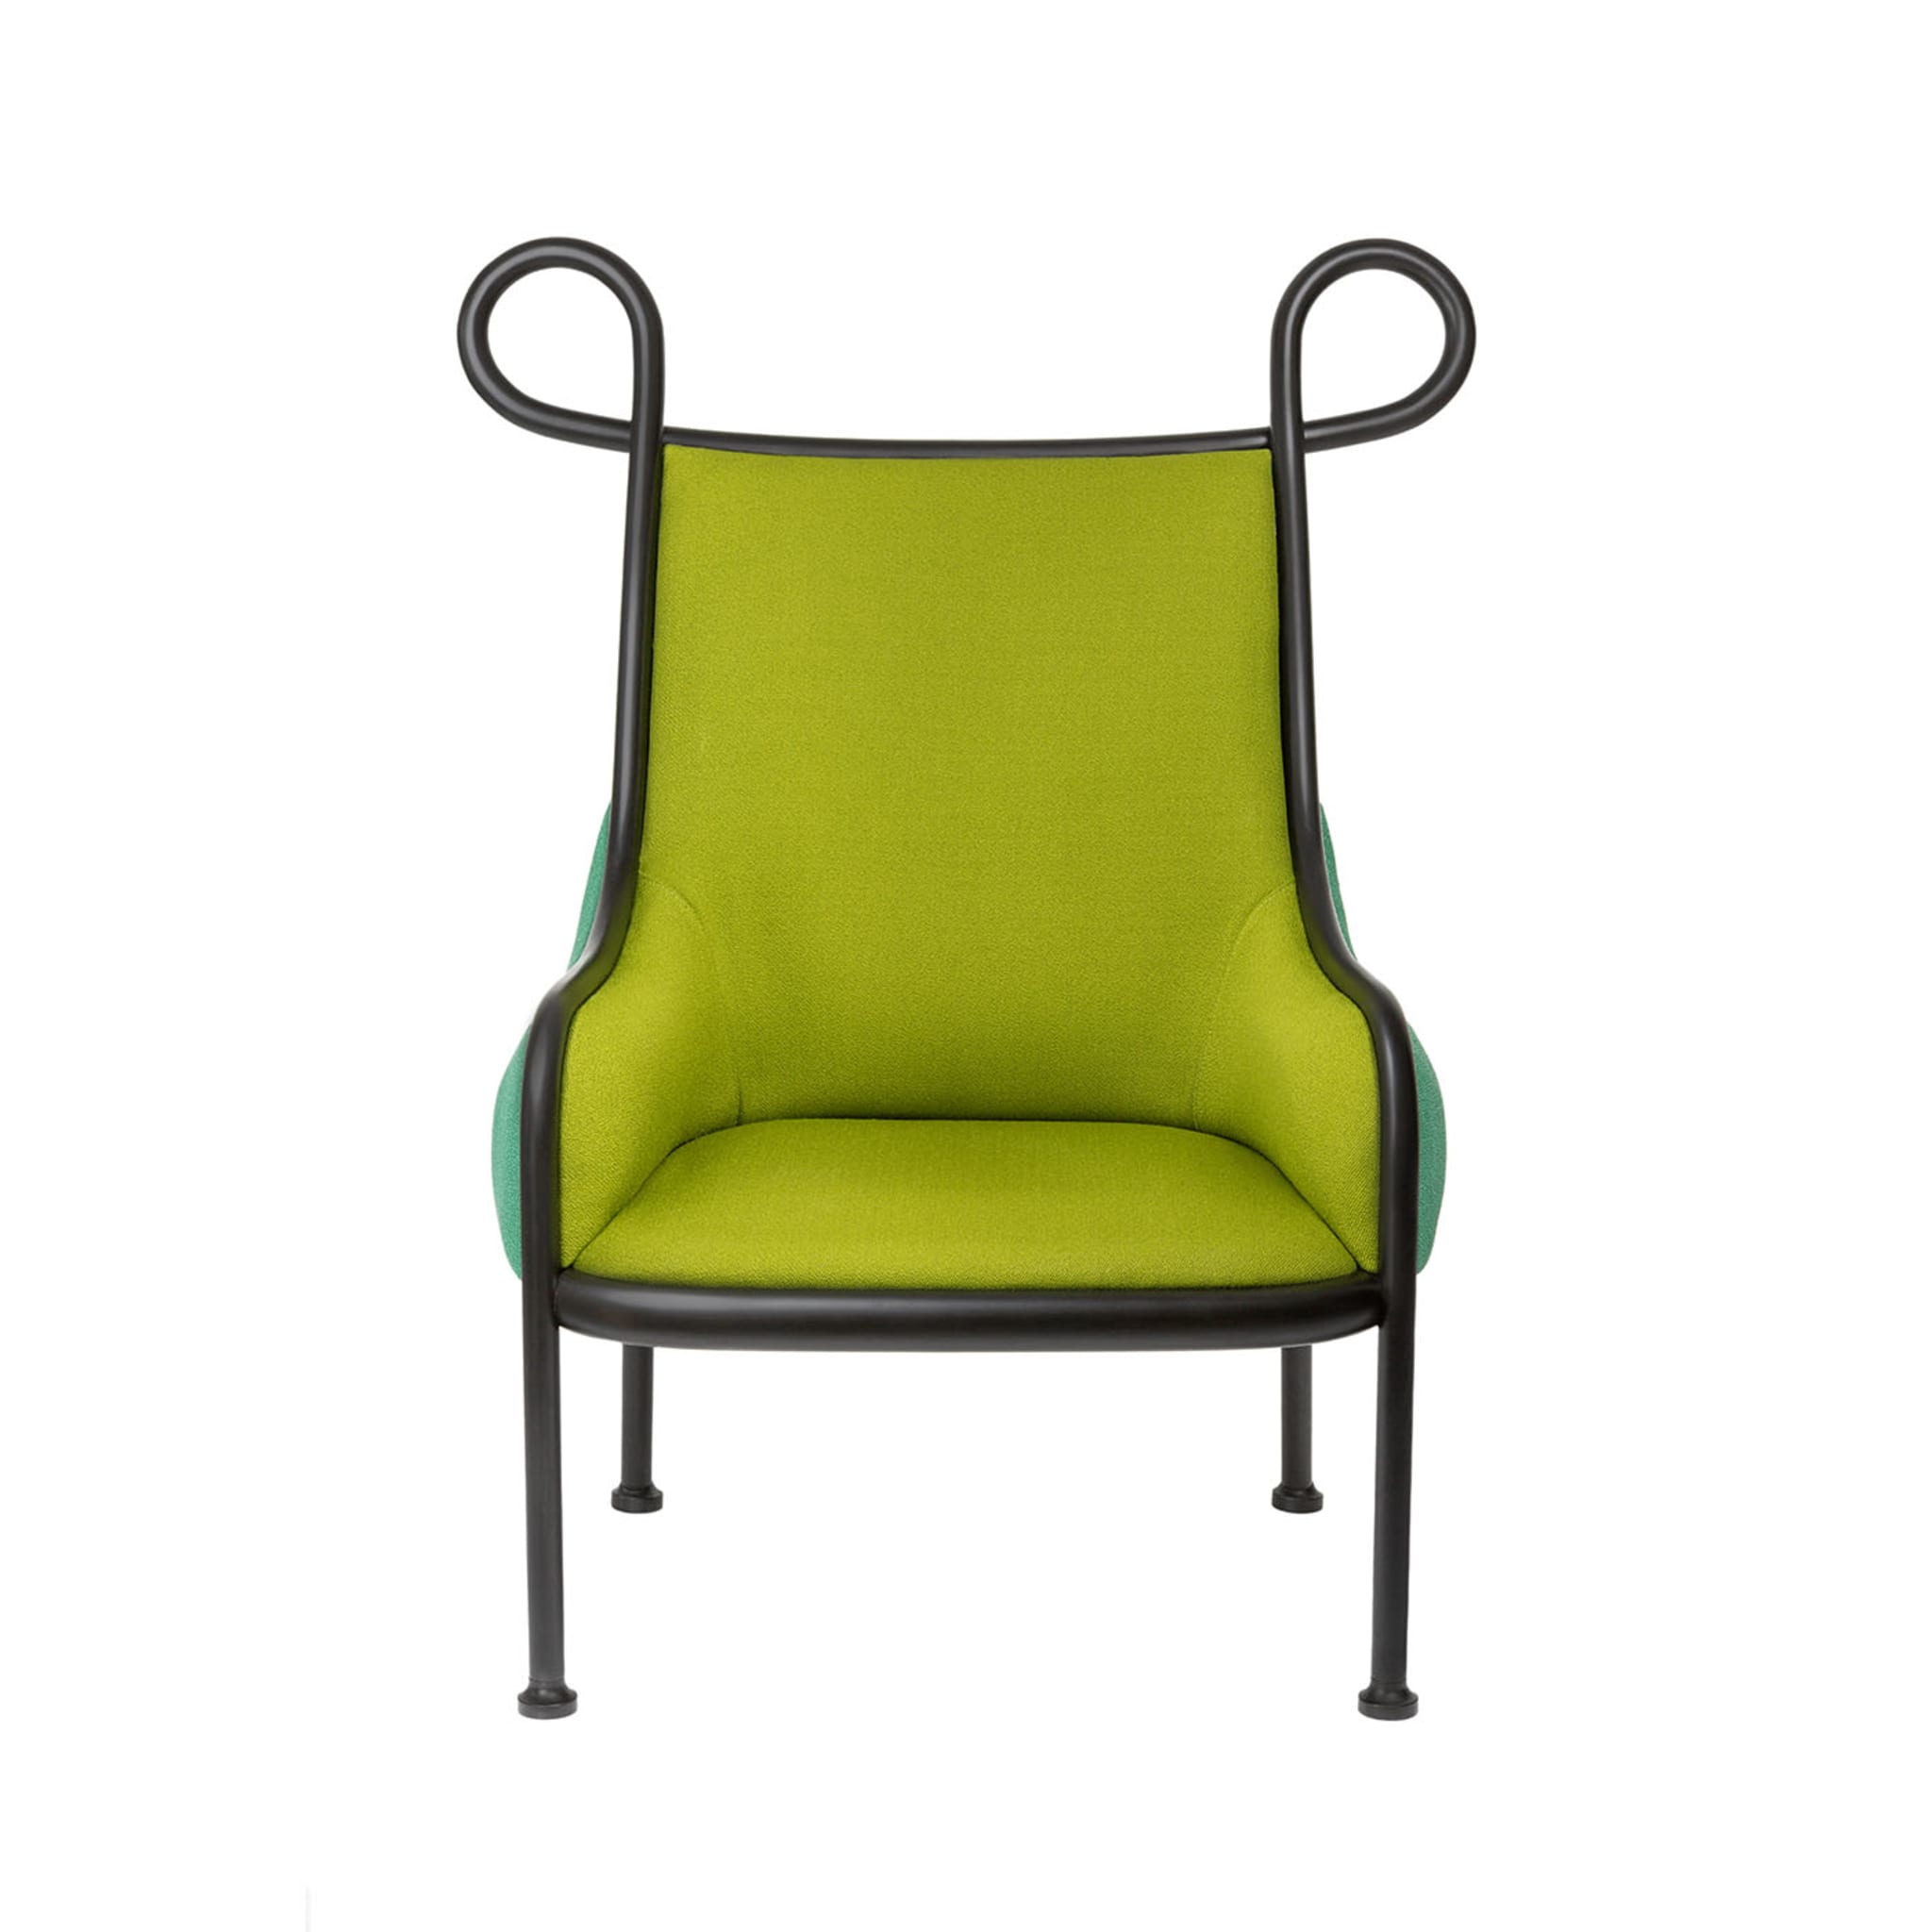 Mickey Green Lounge Chair by India Mahdavi - Alternative view 1